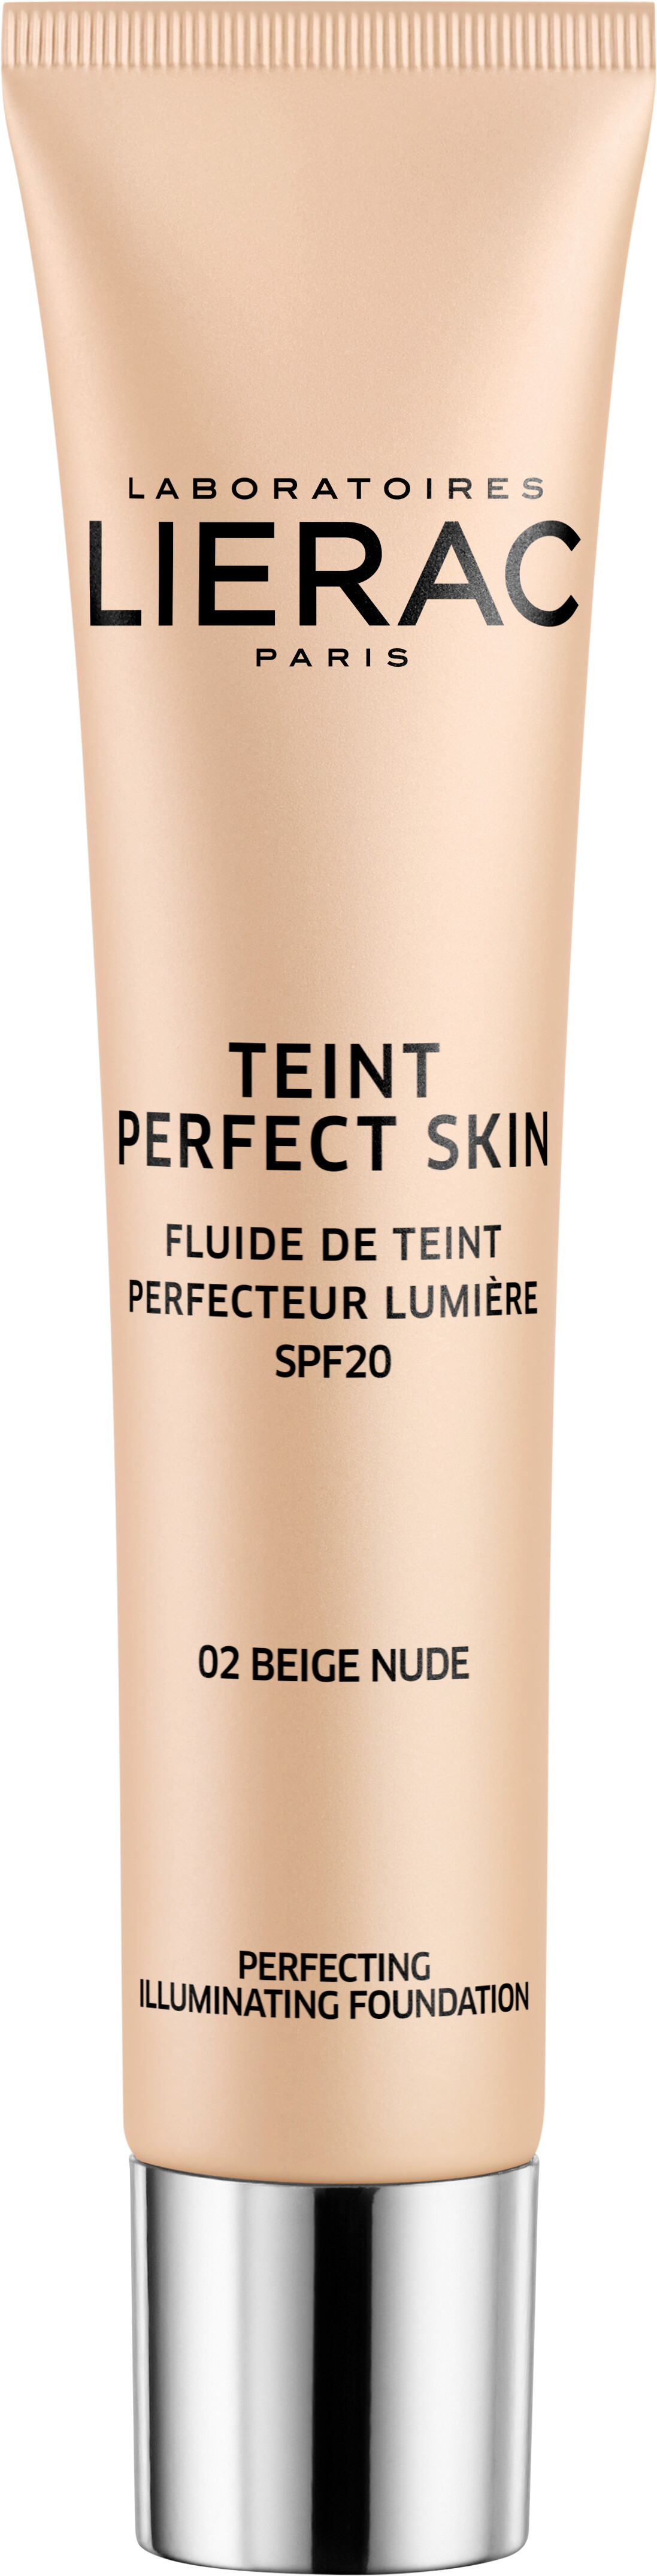 Lierac Teint Perfect Skin Perfecting Illuminating Fluid SPF20 30ml 02 - Nude Beige